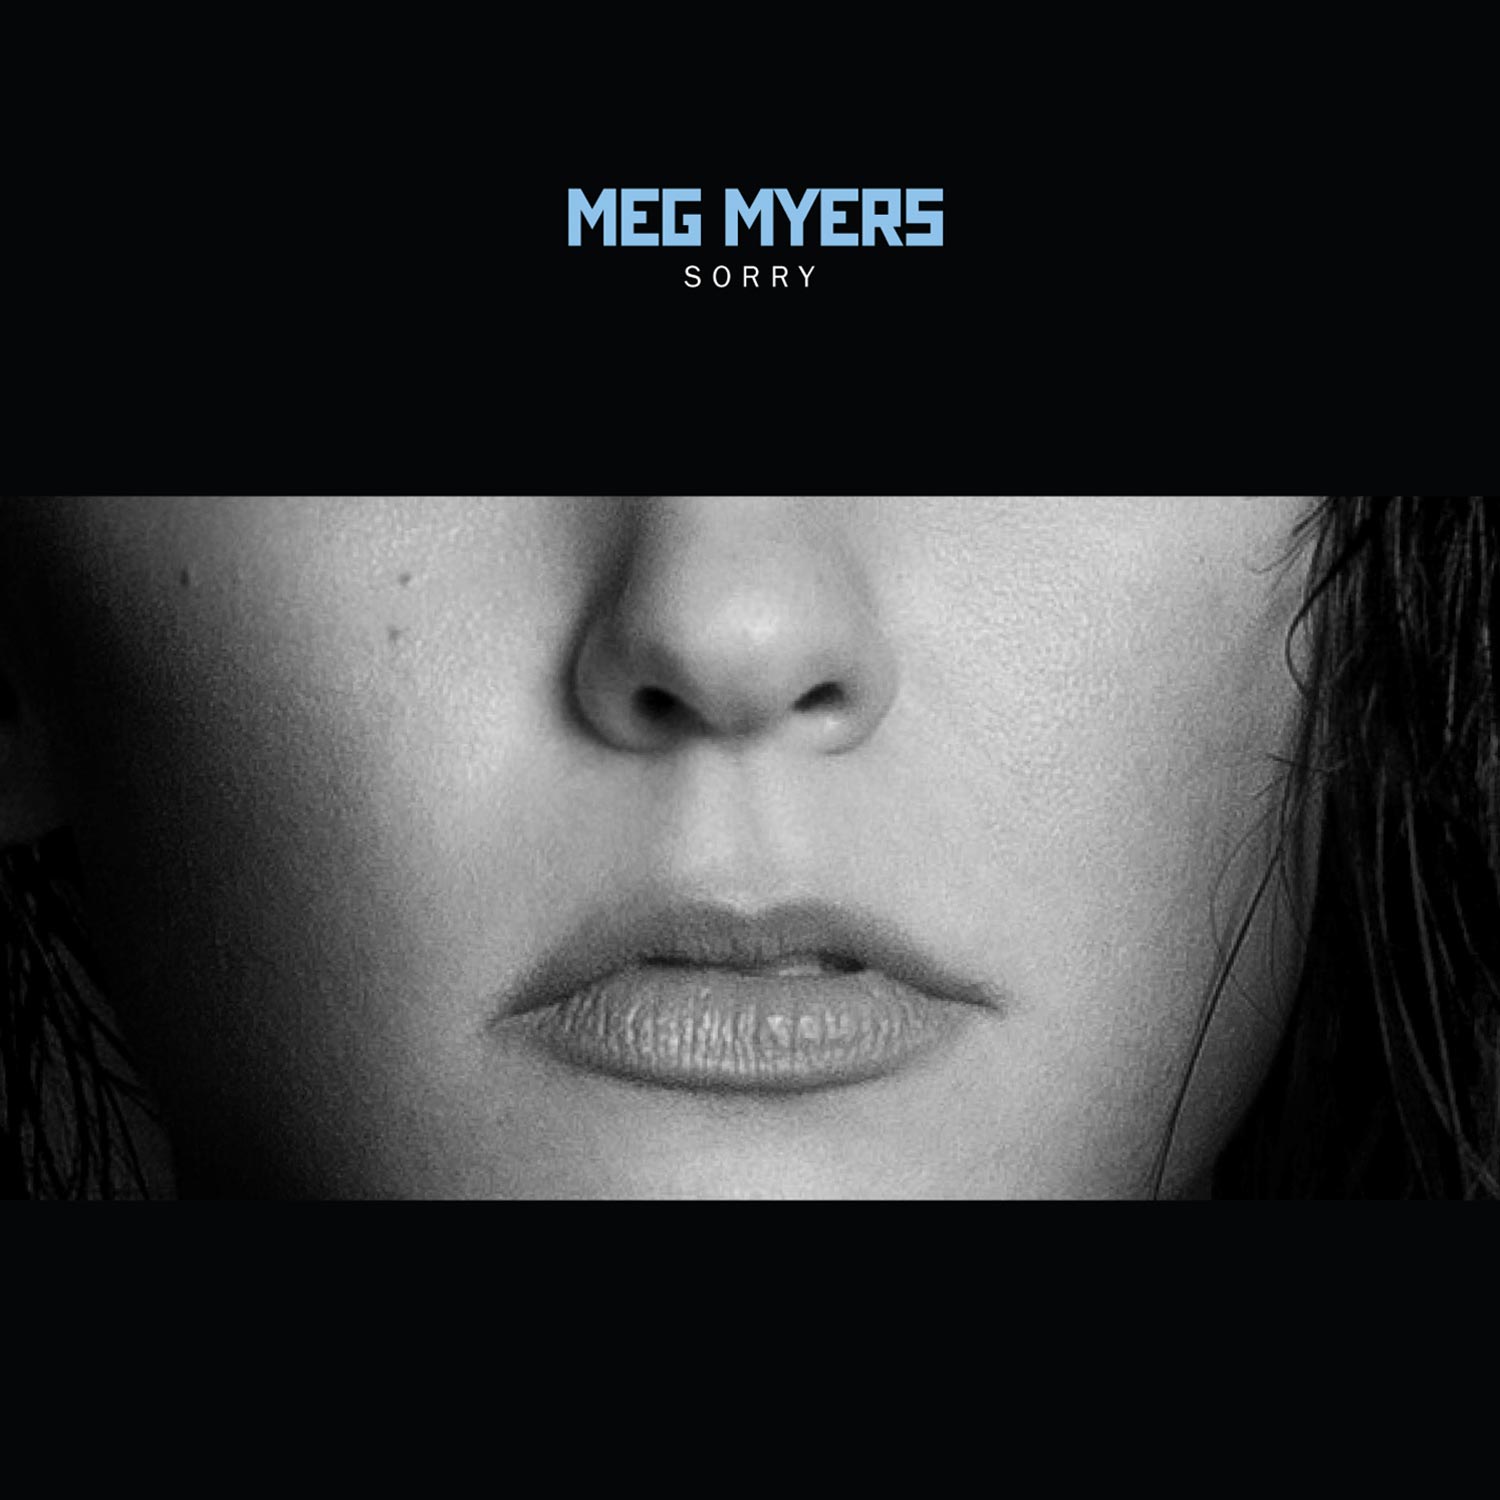 Meg myers desire перевод. Meg Myers. Мег Майерс sorry (2015). Desire Мэг Майерс. Meg Myers обложки.